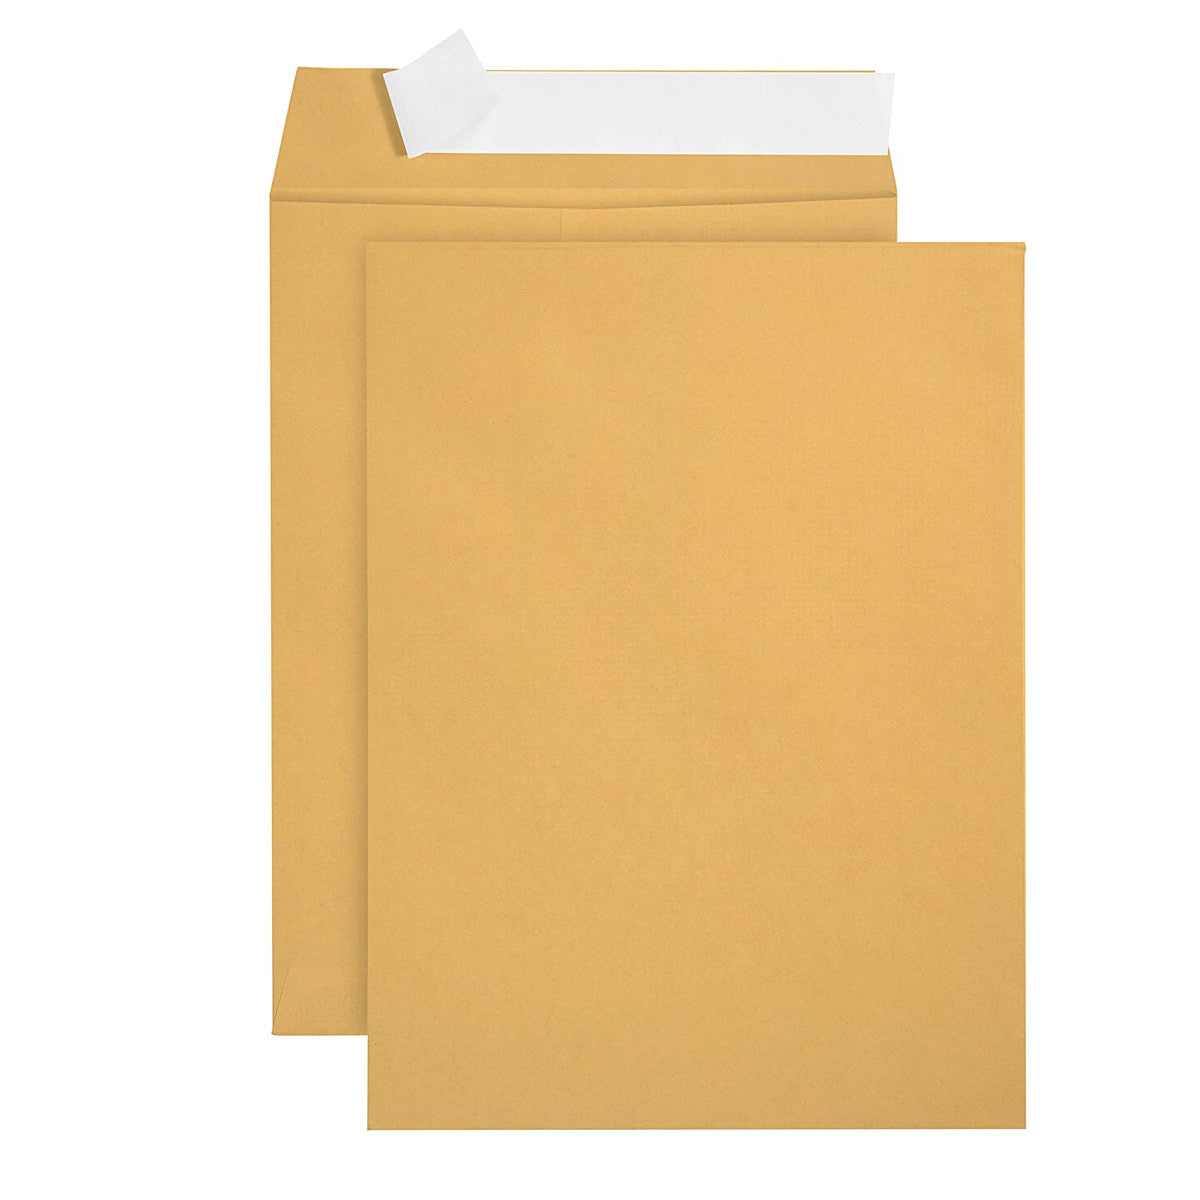 Self Adhesive Envelope, 6 x 9", pk 5